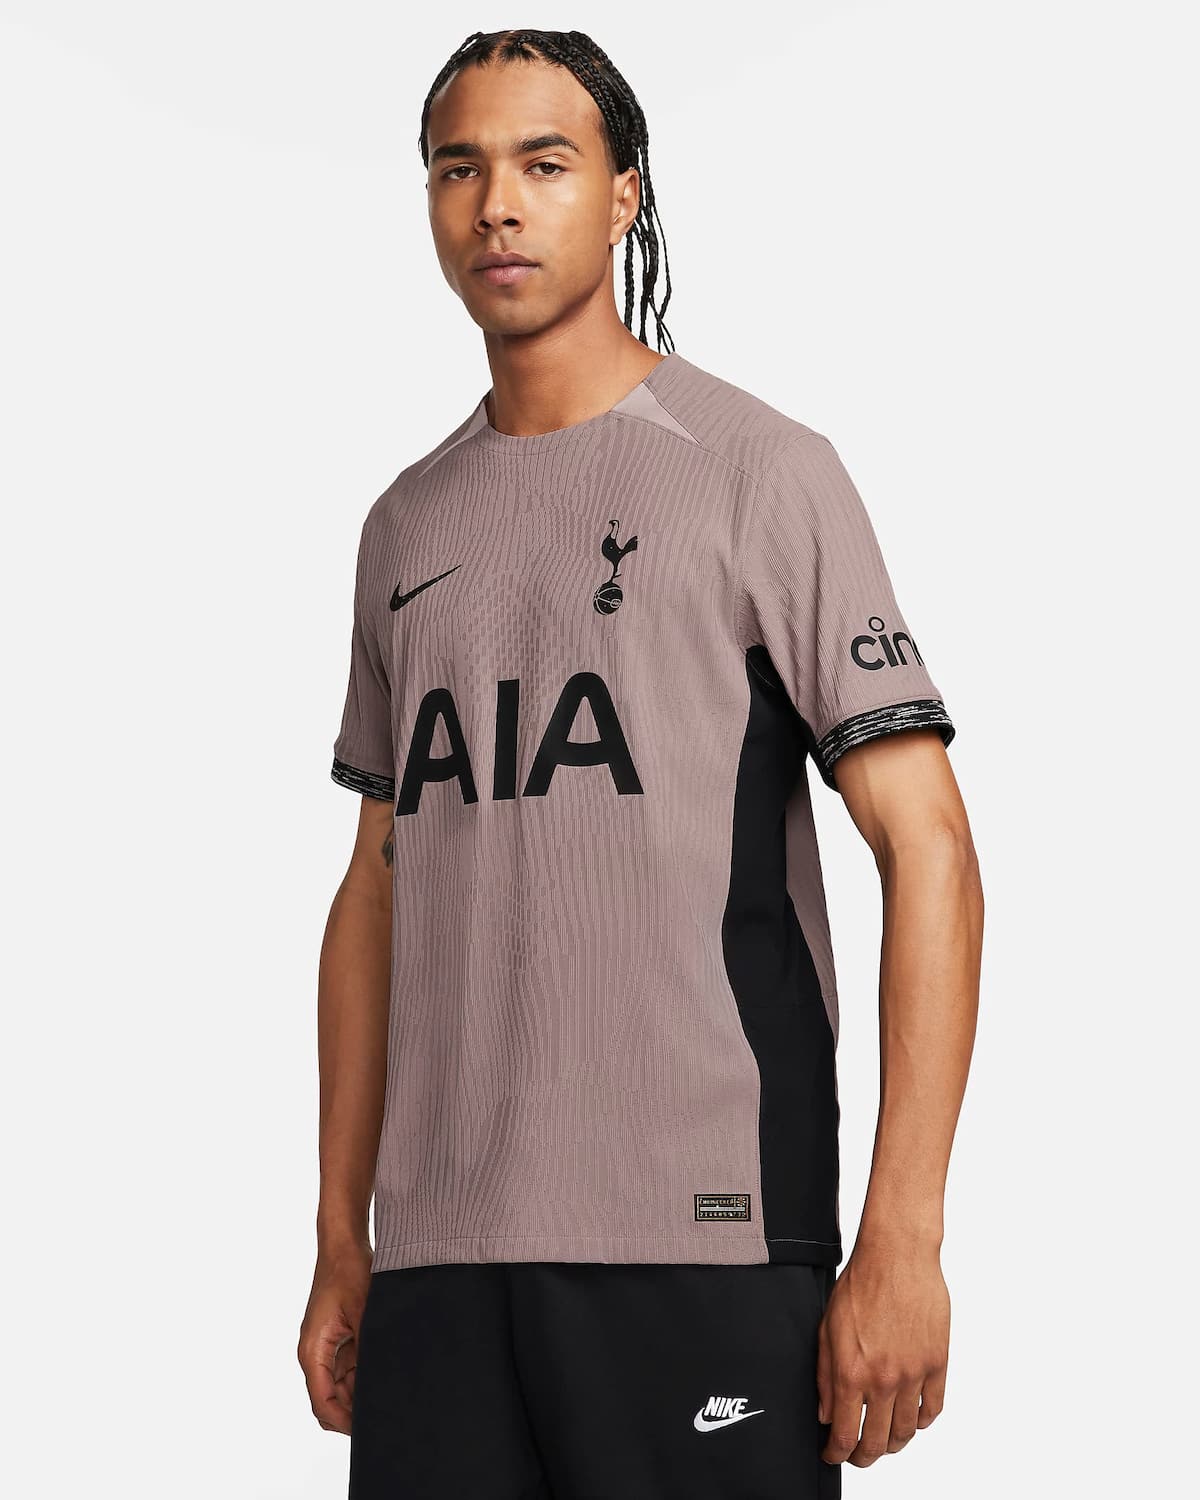 2023 24 Tottenham Hotspur jersey